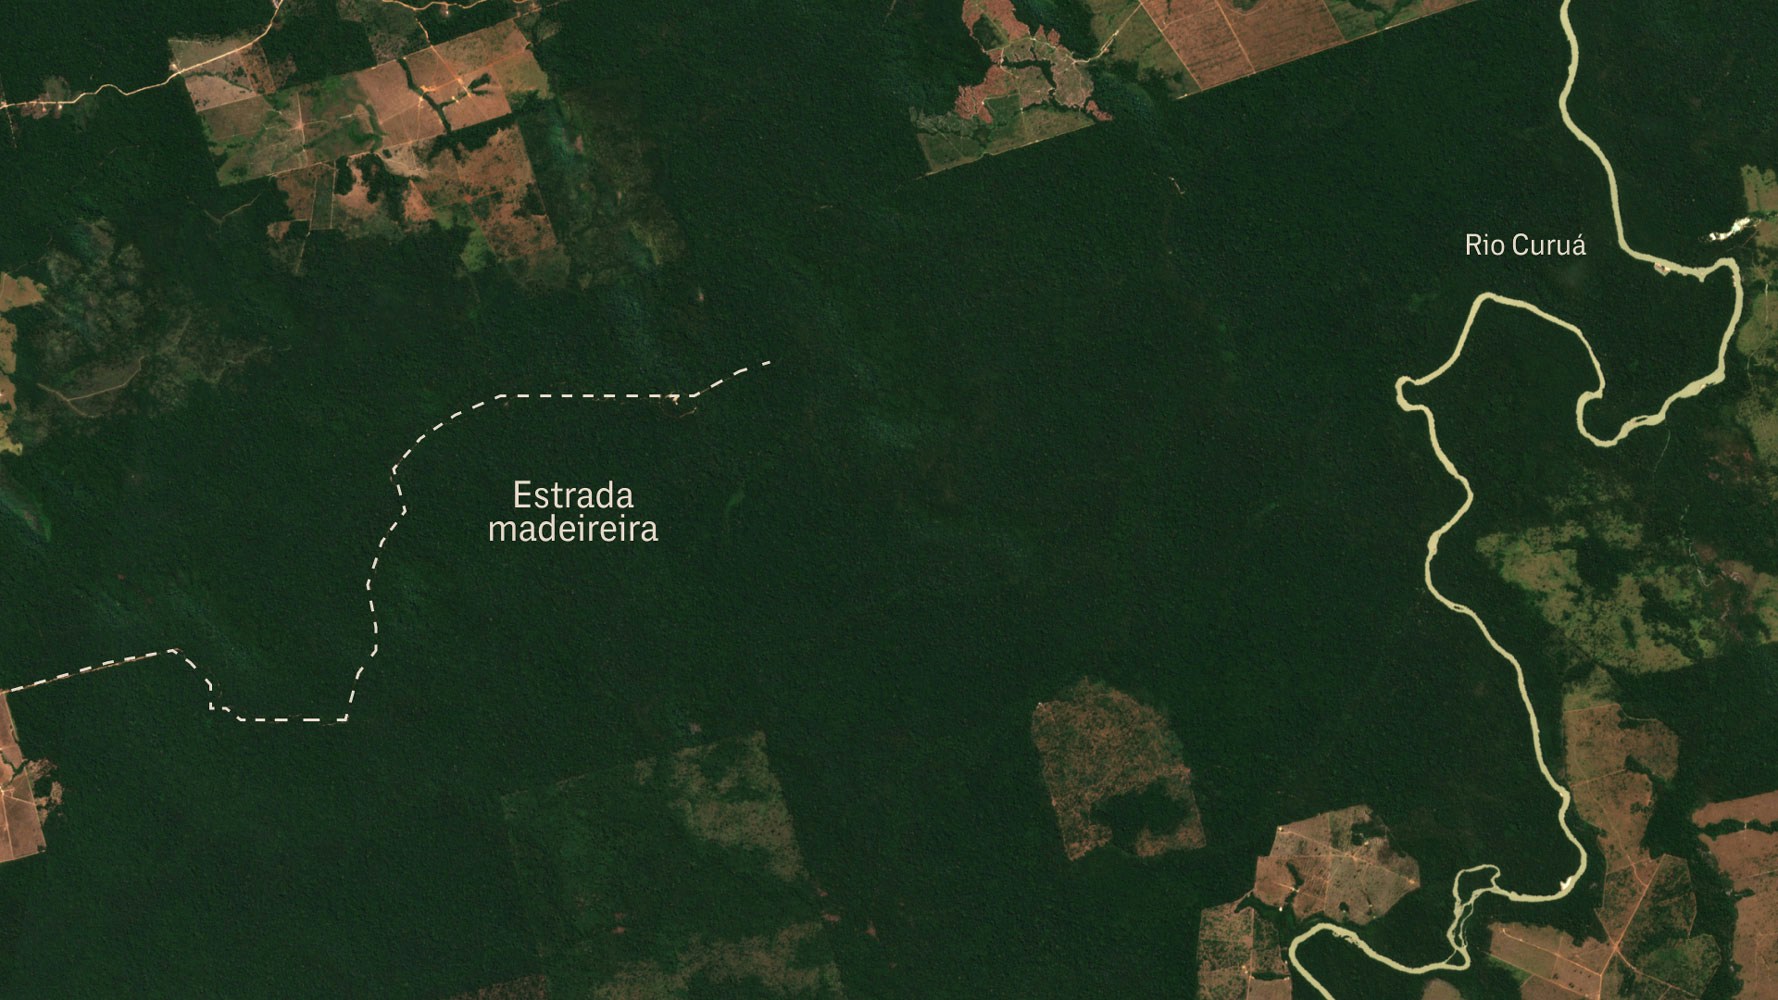 amazonia-pasto-desmatamento-soja-gado-estrada-madeireira